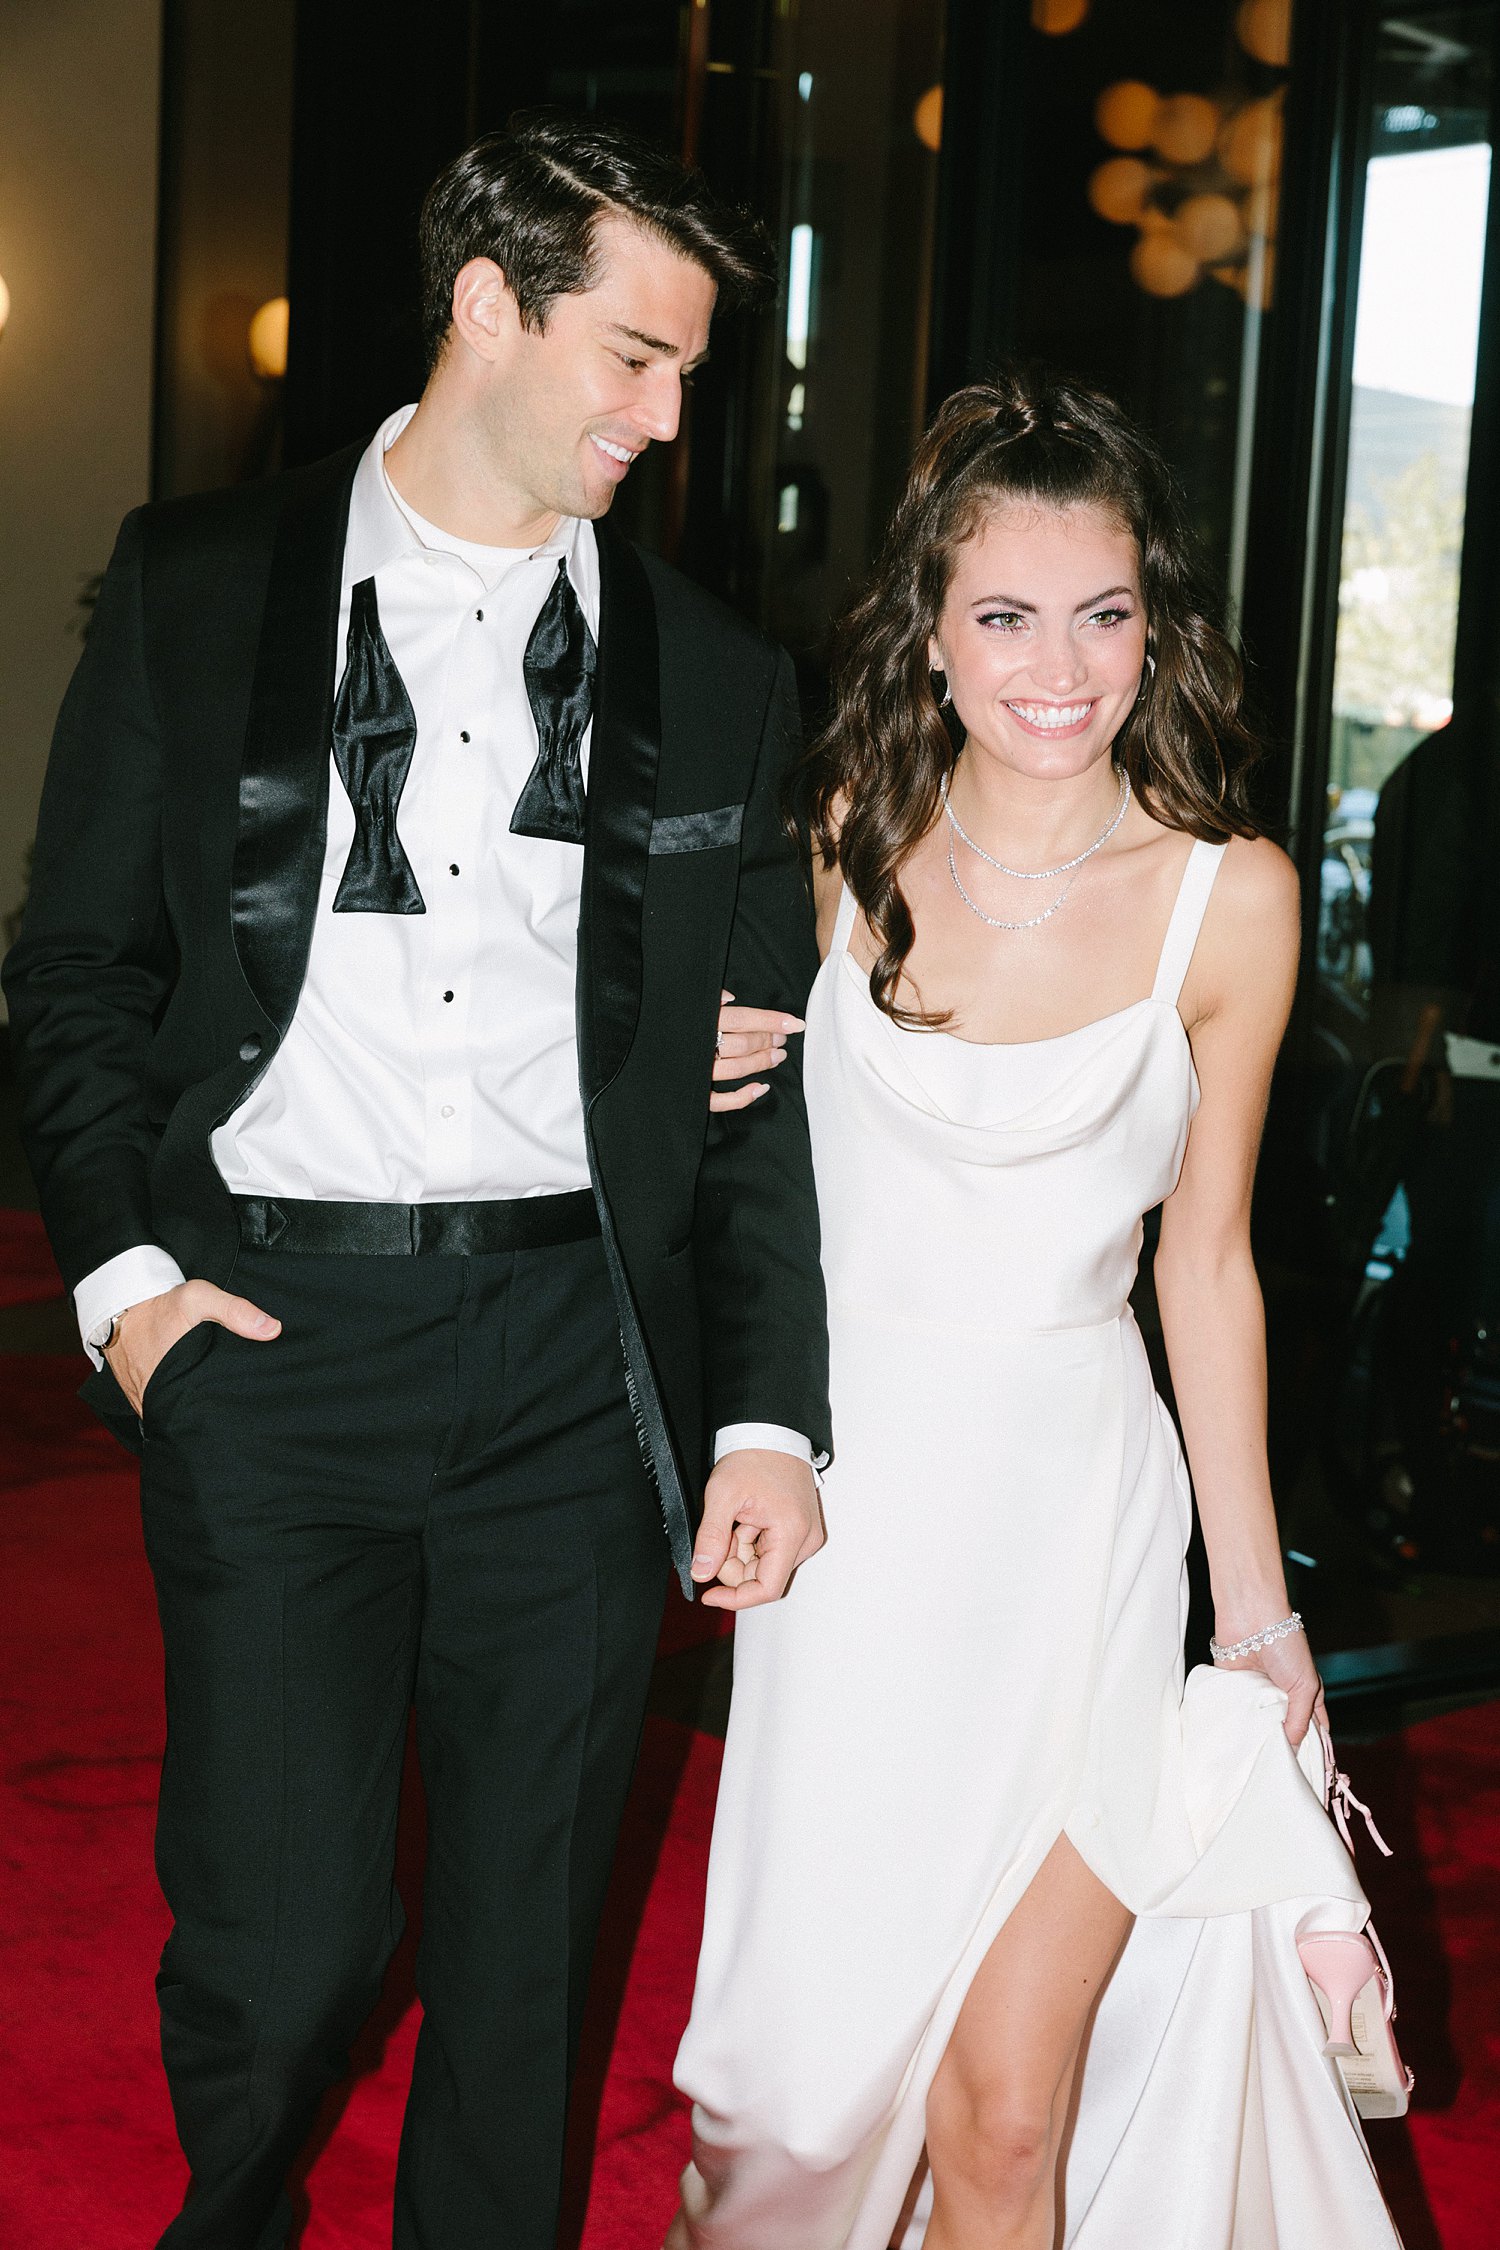 man in black tuxedo with woman in white dress walking in red carpet Virgin Hotel Dallas lobby smiling